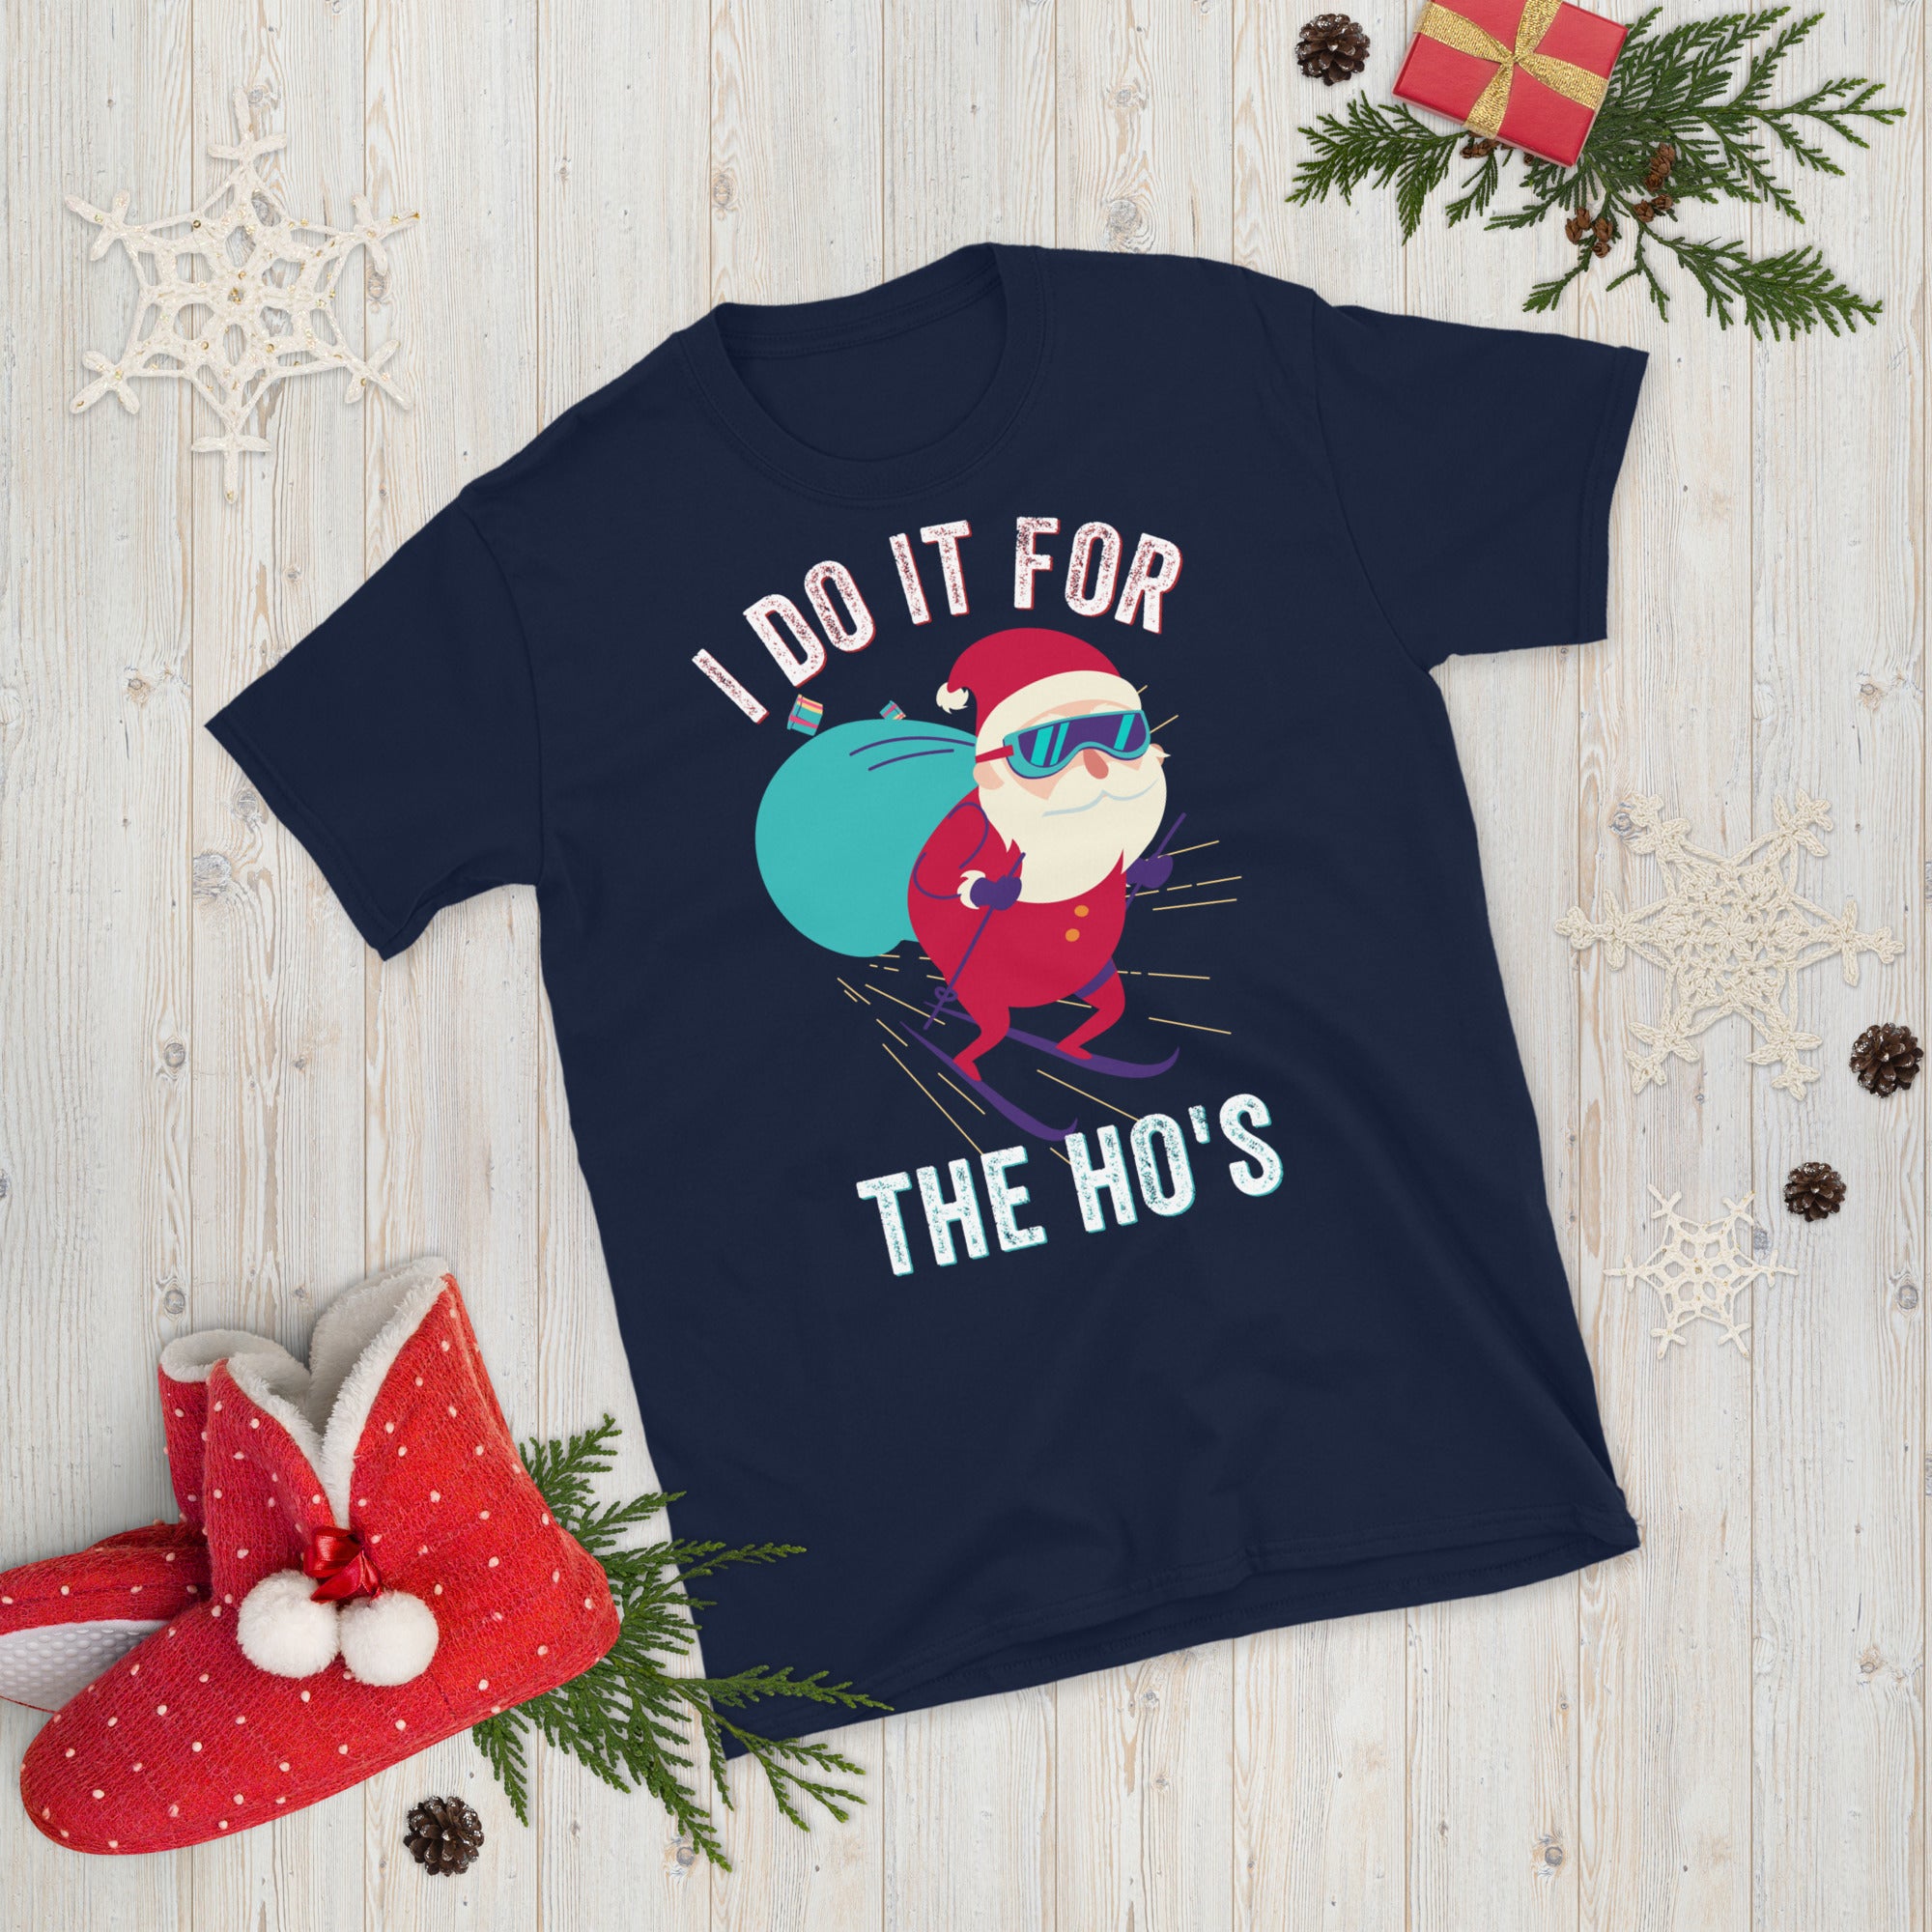 I Do It For The Hos Shirt, Rude Christmas Shirt, Santa Face Shirt, Santa Face Shirt, Rude Xmas Shirt, Offensive Xmas Gifts, Joke Xmas